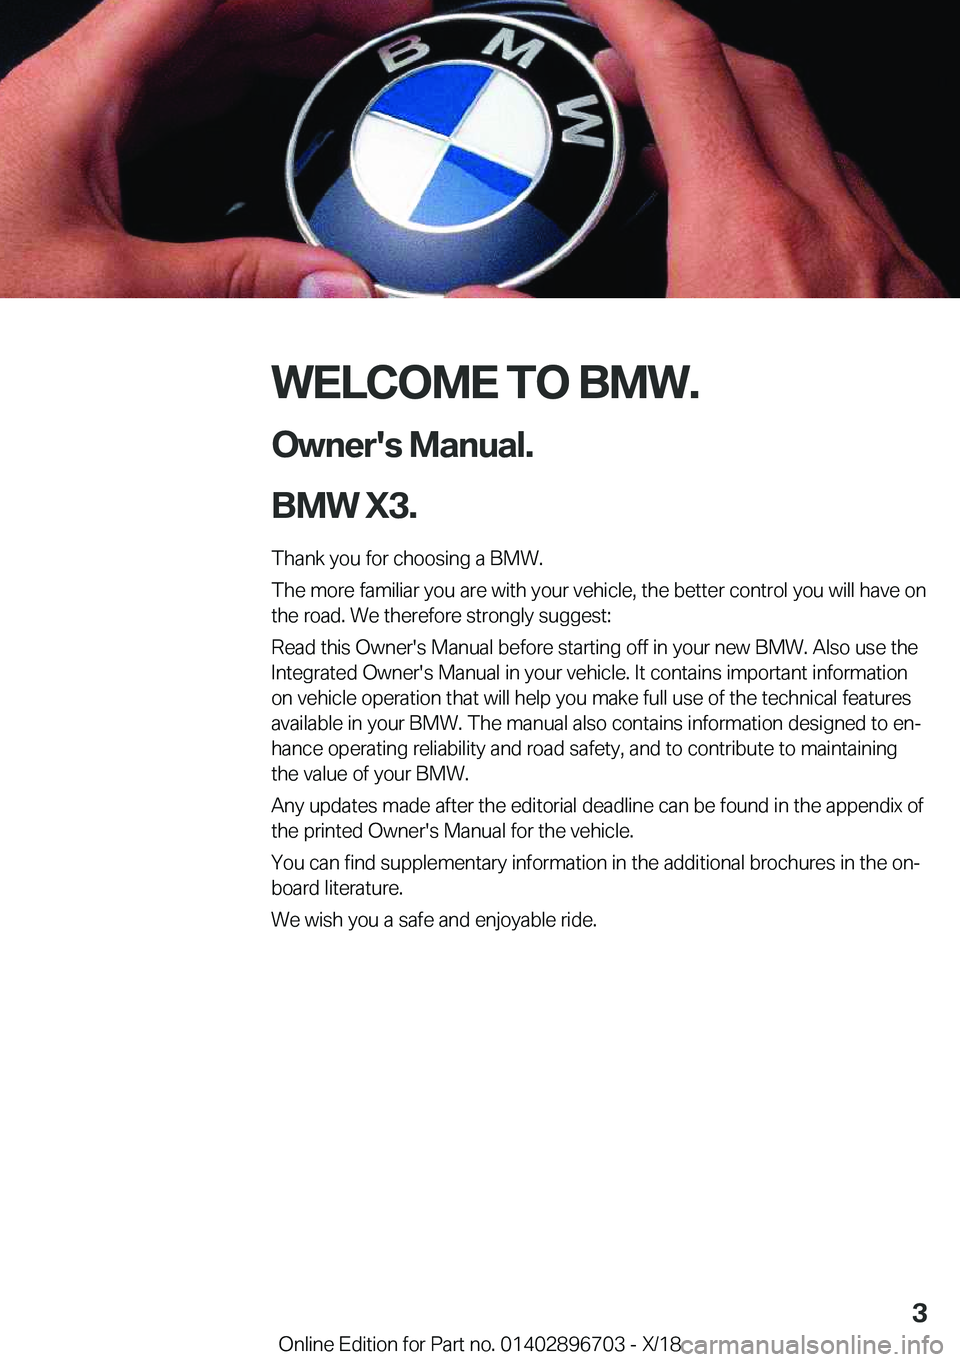 BMW X3 2019  Owners Manual �W�E�L�C�O�M�E��T�O��B�M�W�.�O�w�n�e�r�'�s��M�a�n�u�a�l�.
�B�M�W��X�3�.
�T�h�a�n�k��y�o�u��f�o�r��c�h�o�o�s�i�n�g��a��B�M�W�.
�T�h�e��m�o�r�e��f�a�m�i�l�i�a�r��y�o�u��a�r�e��w�i�t�h�